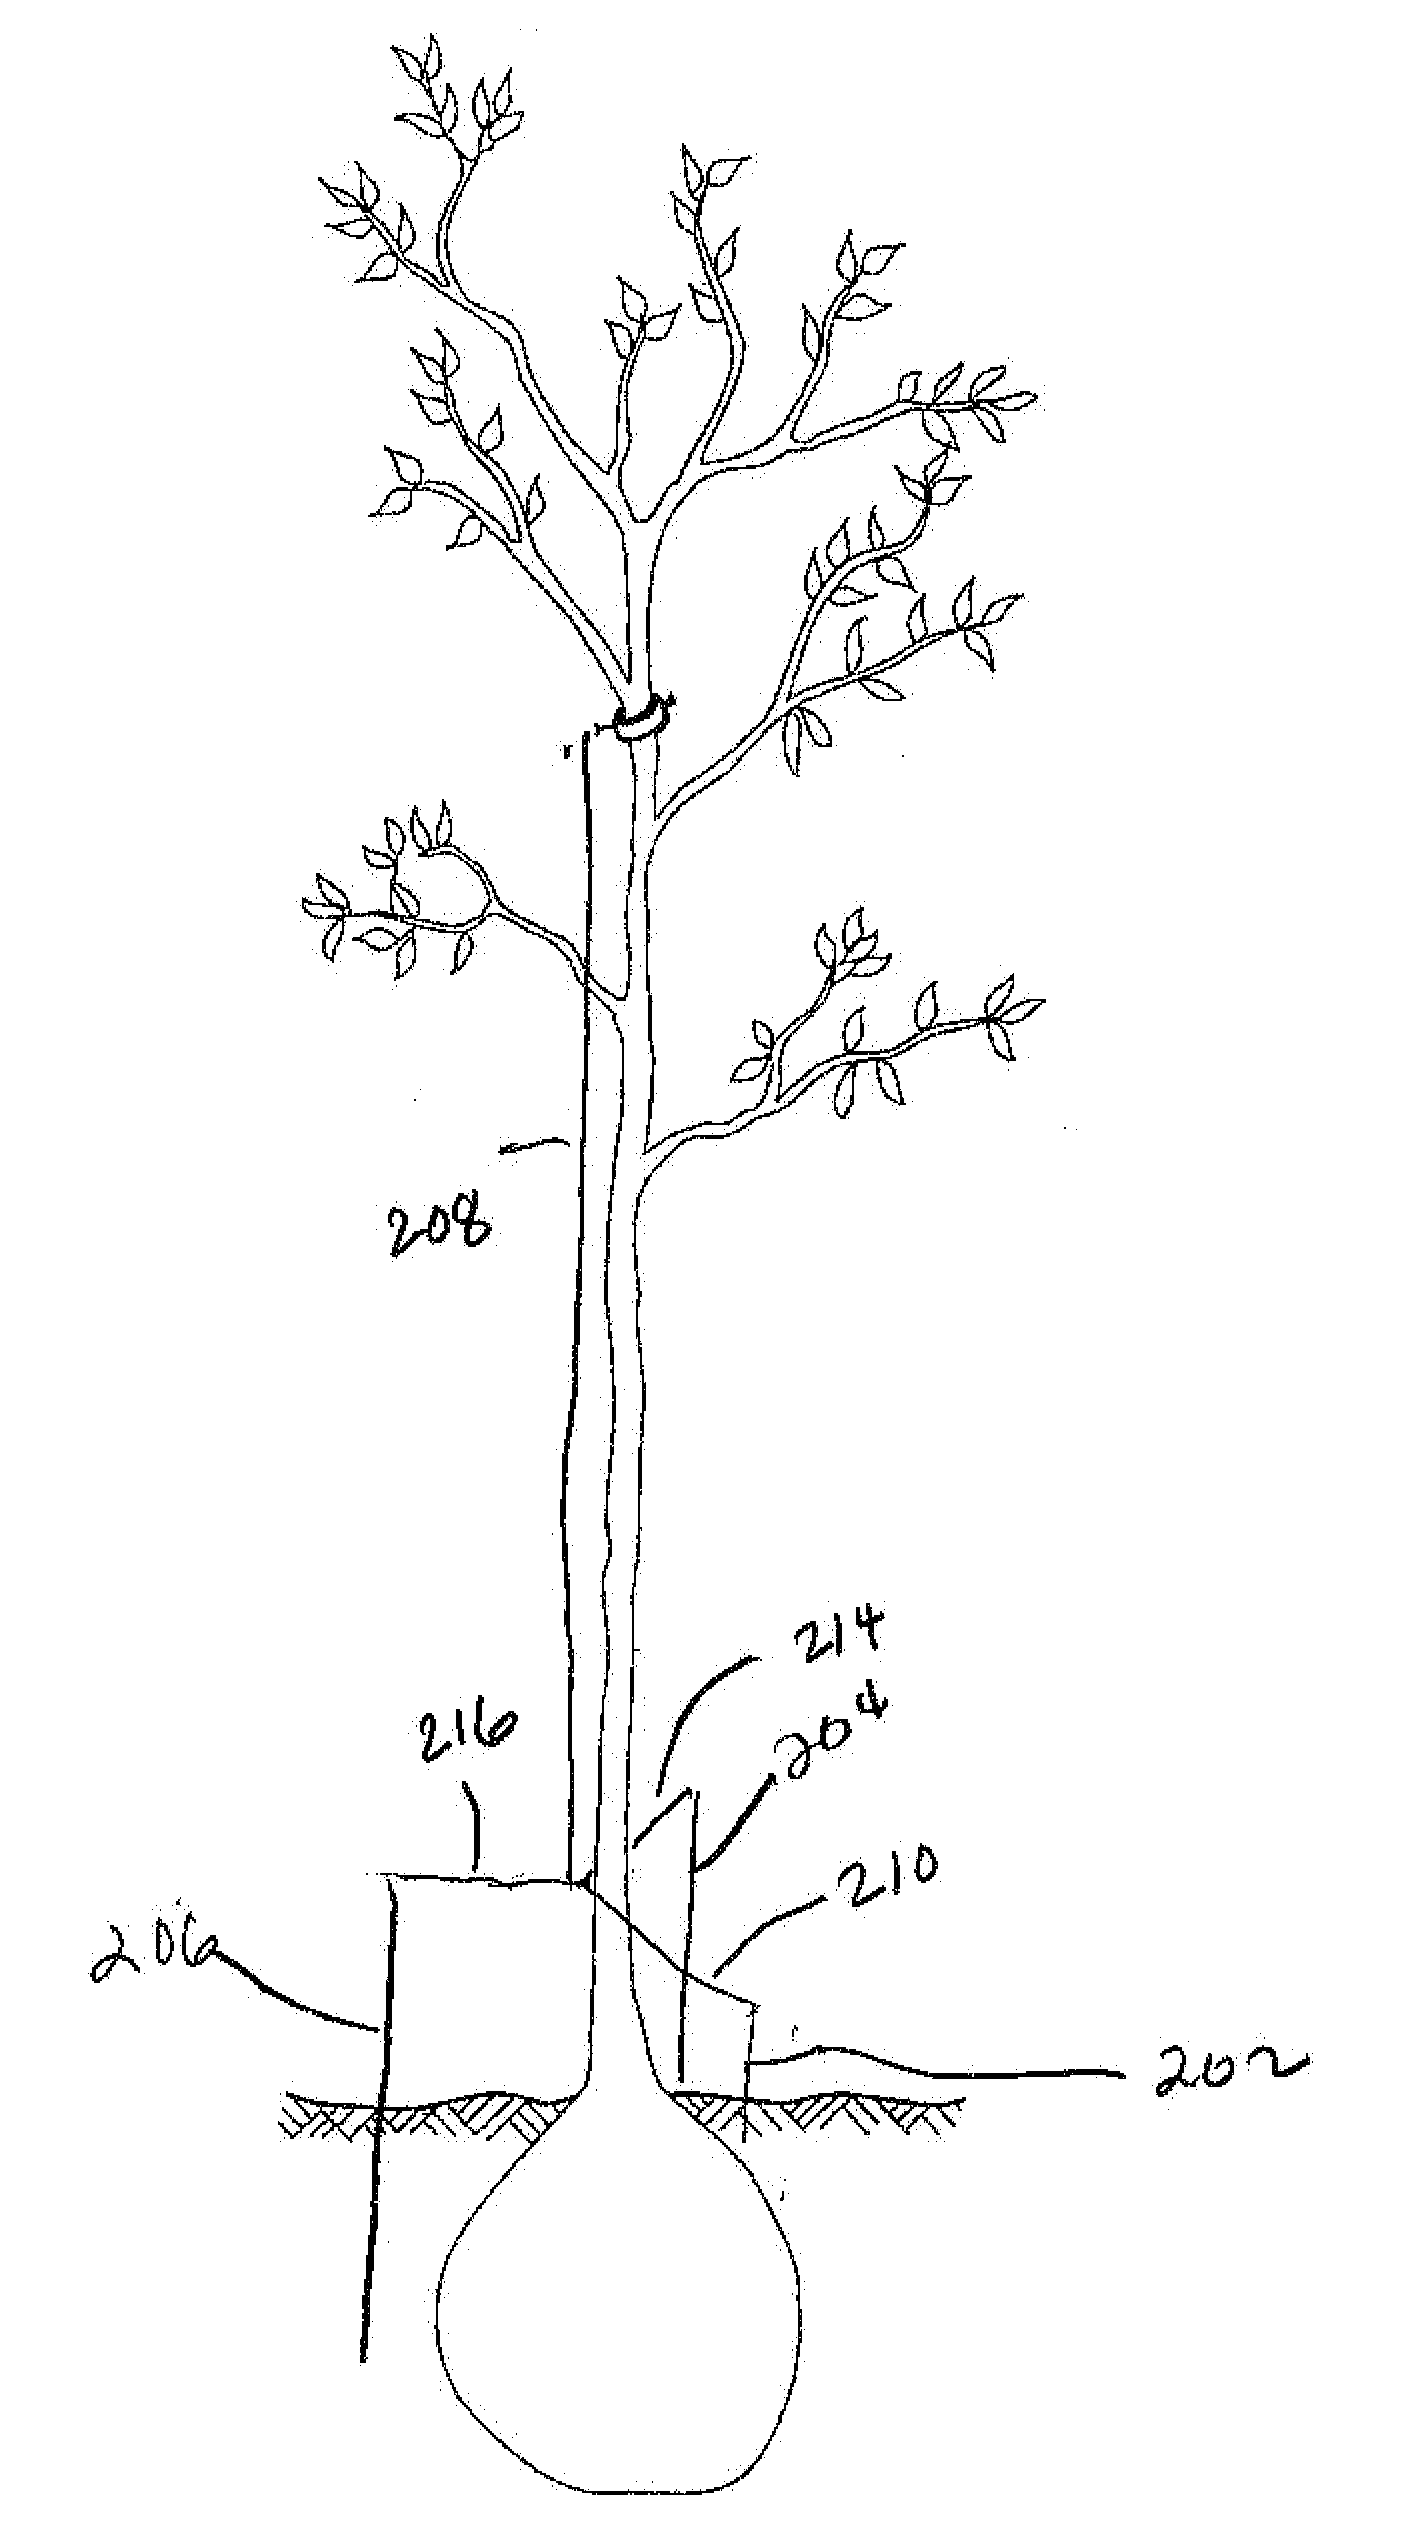 Tree stake